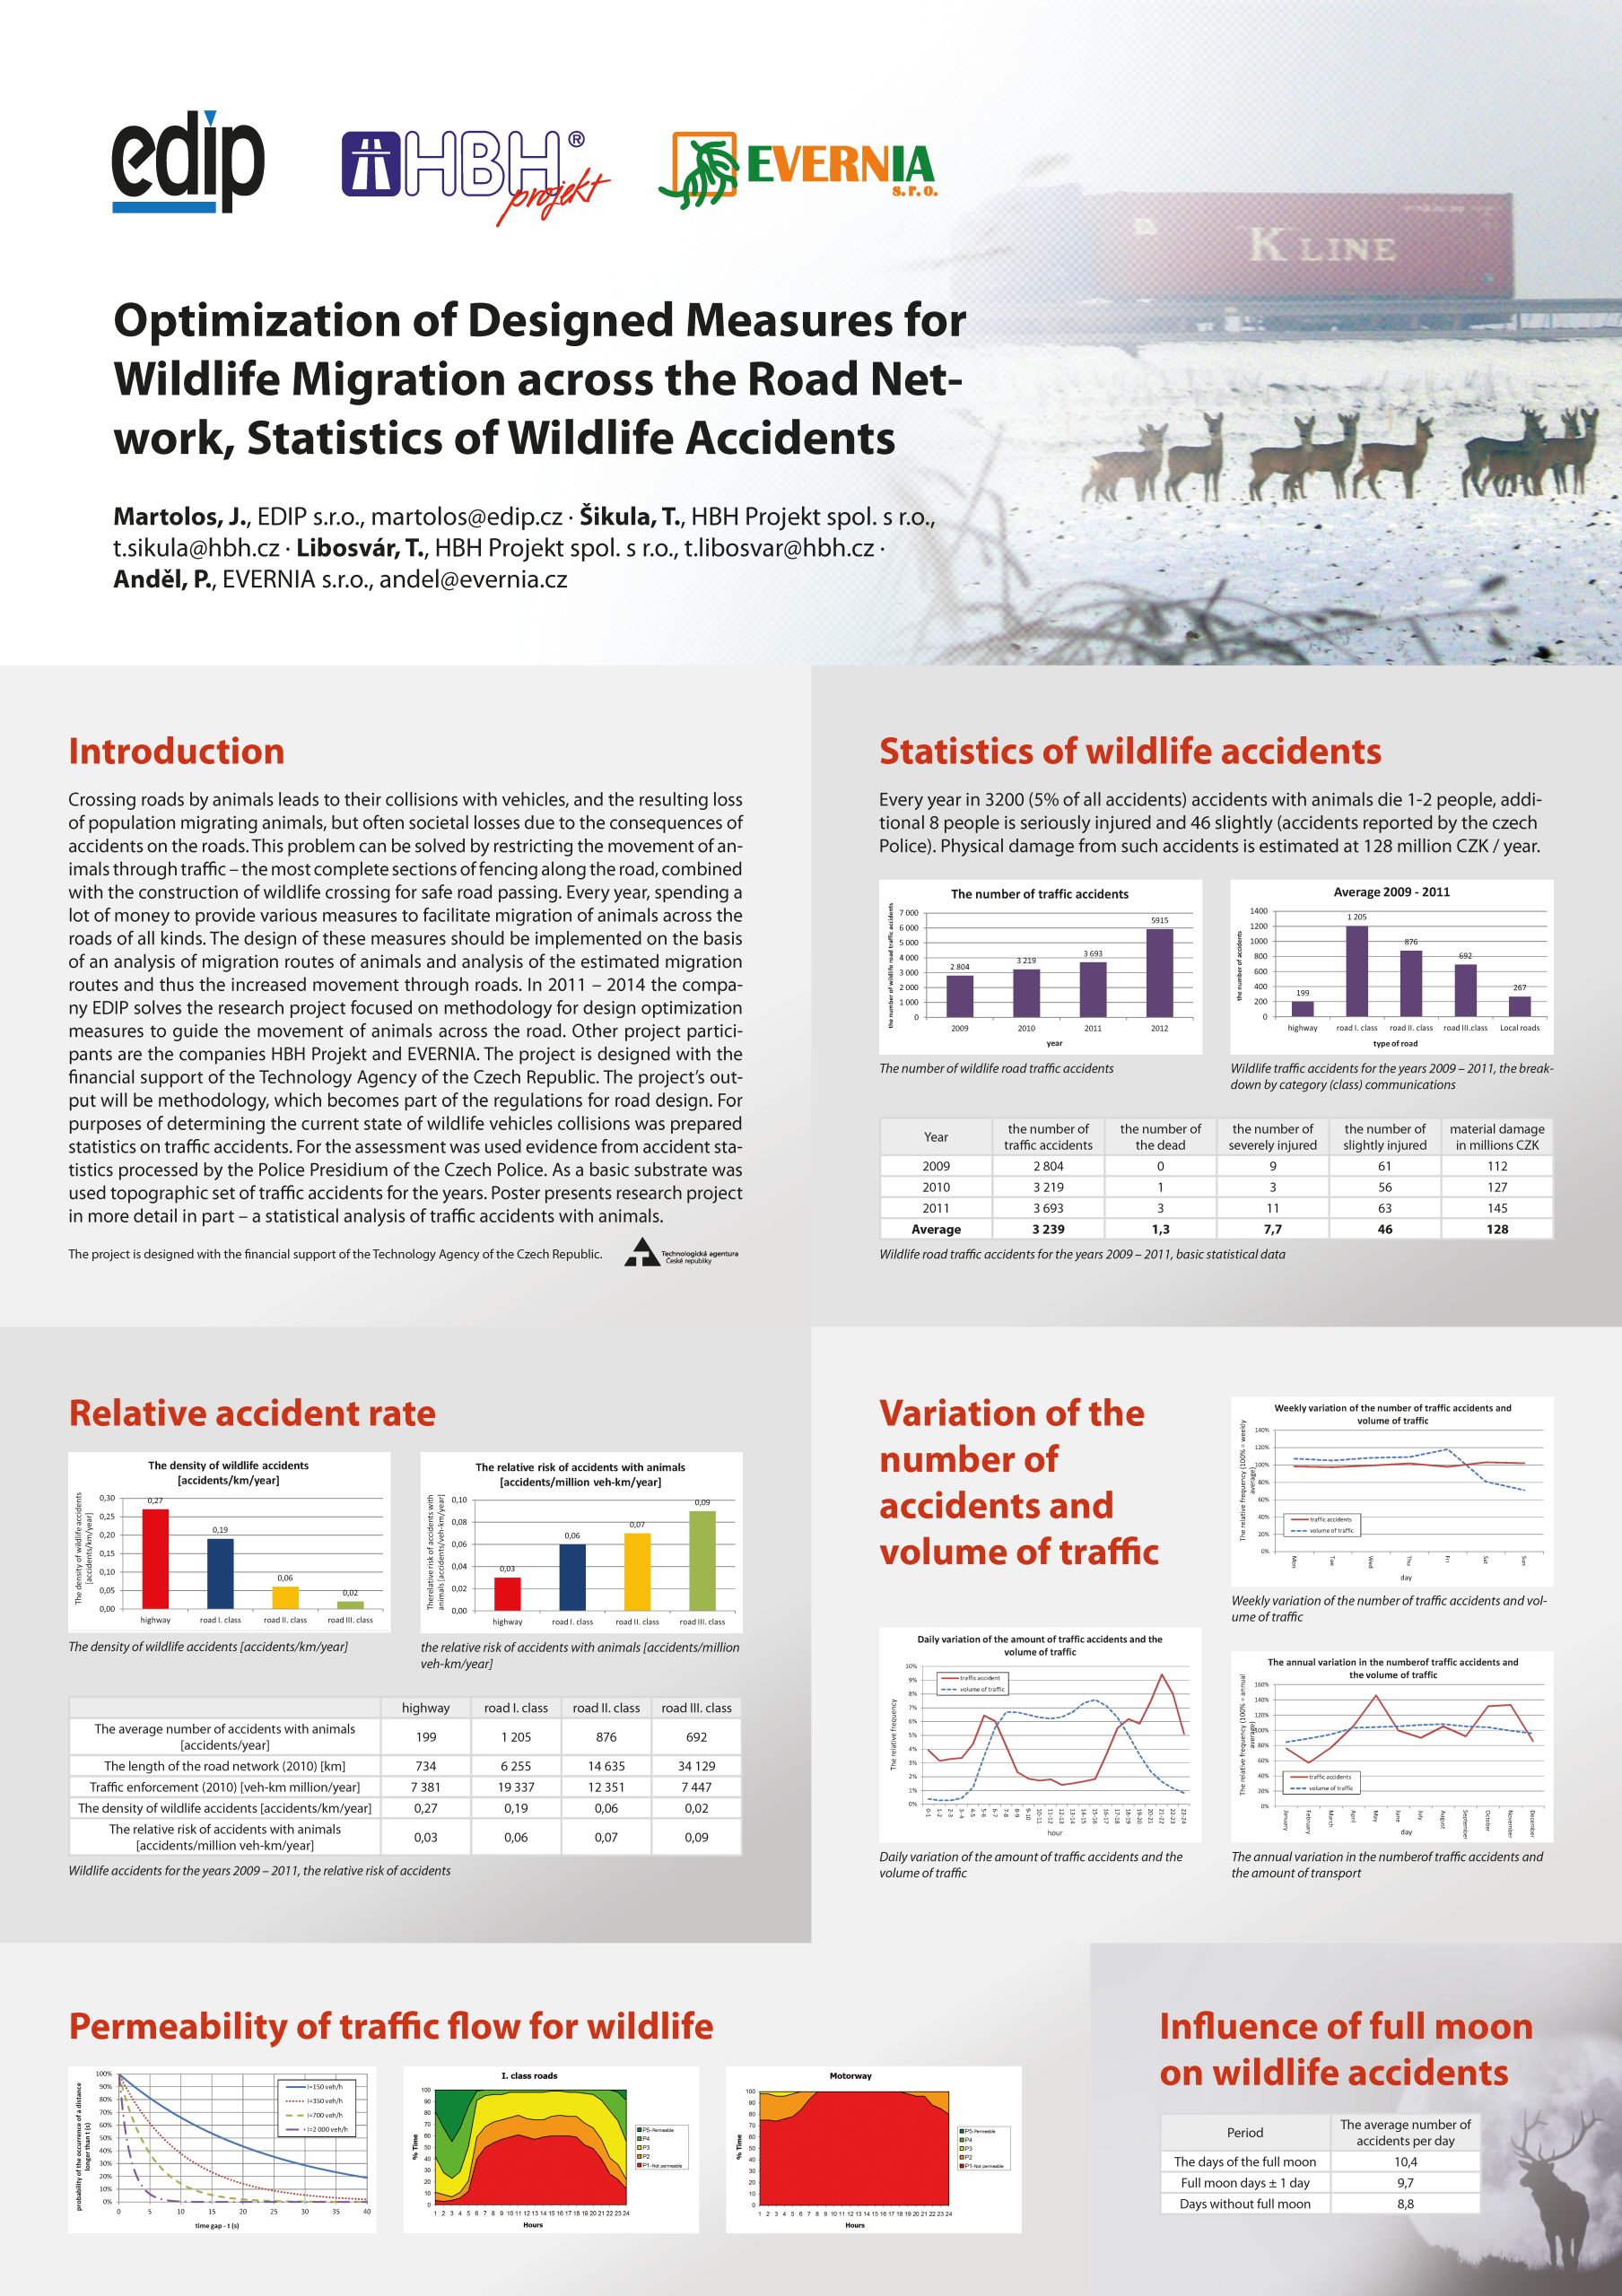 Optimalization of Designed Measures for Wildlife Migration, EDIP